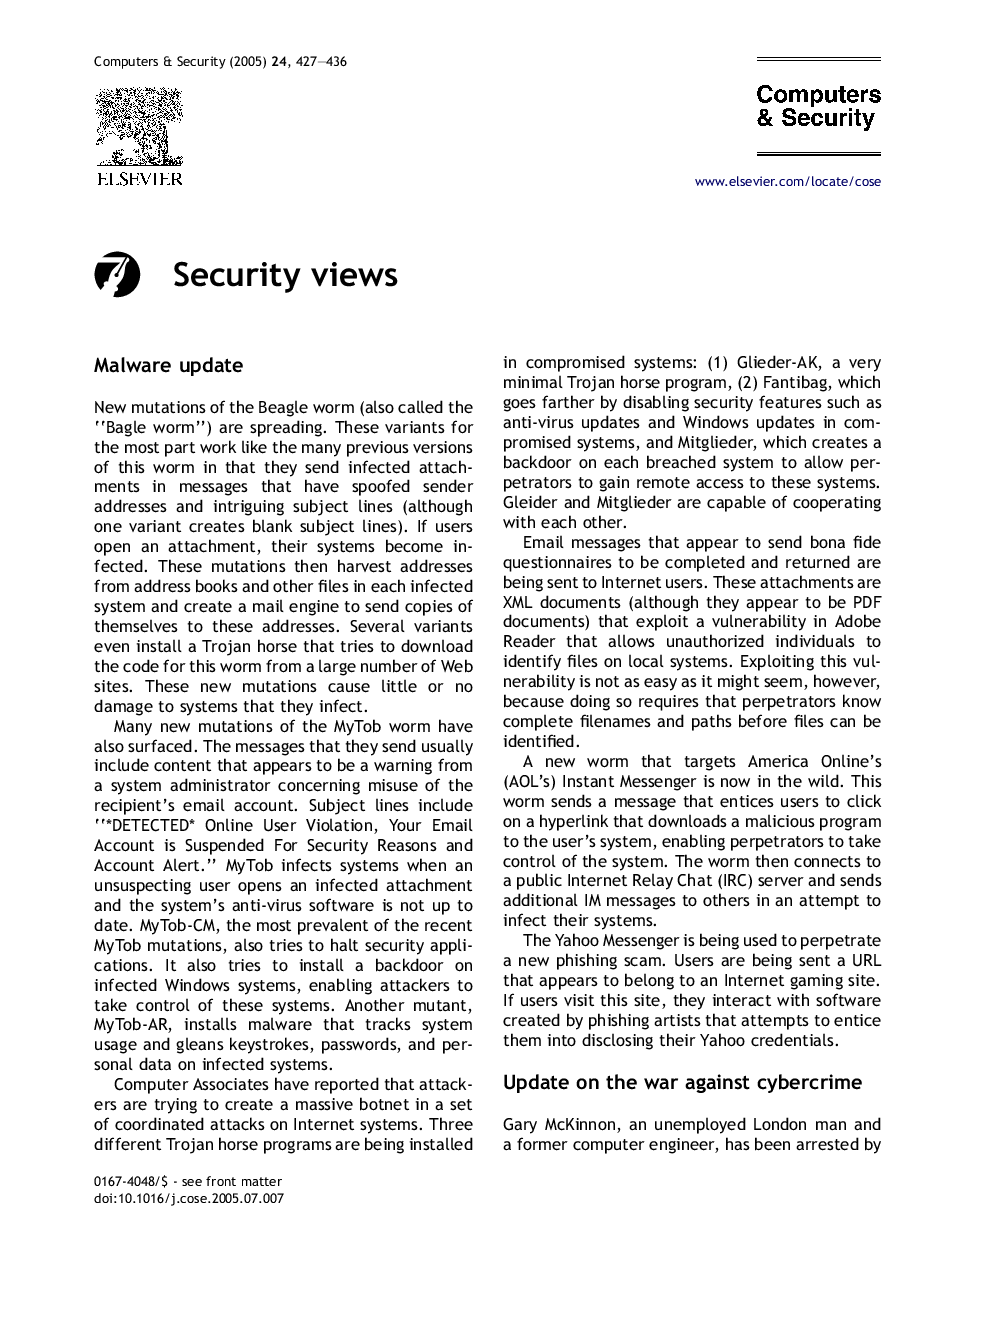 Security views